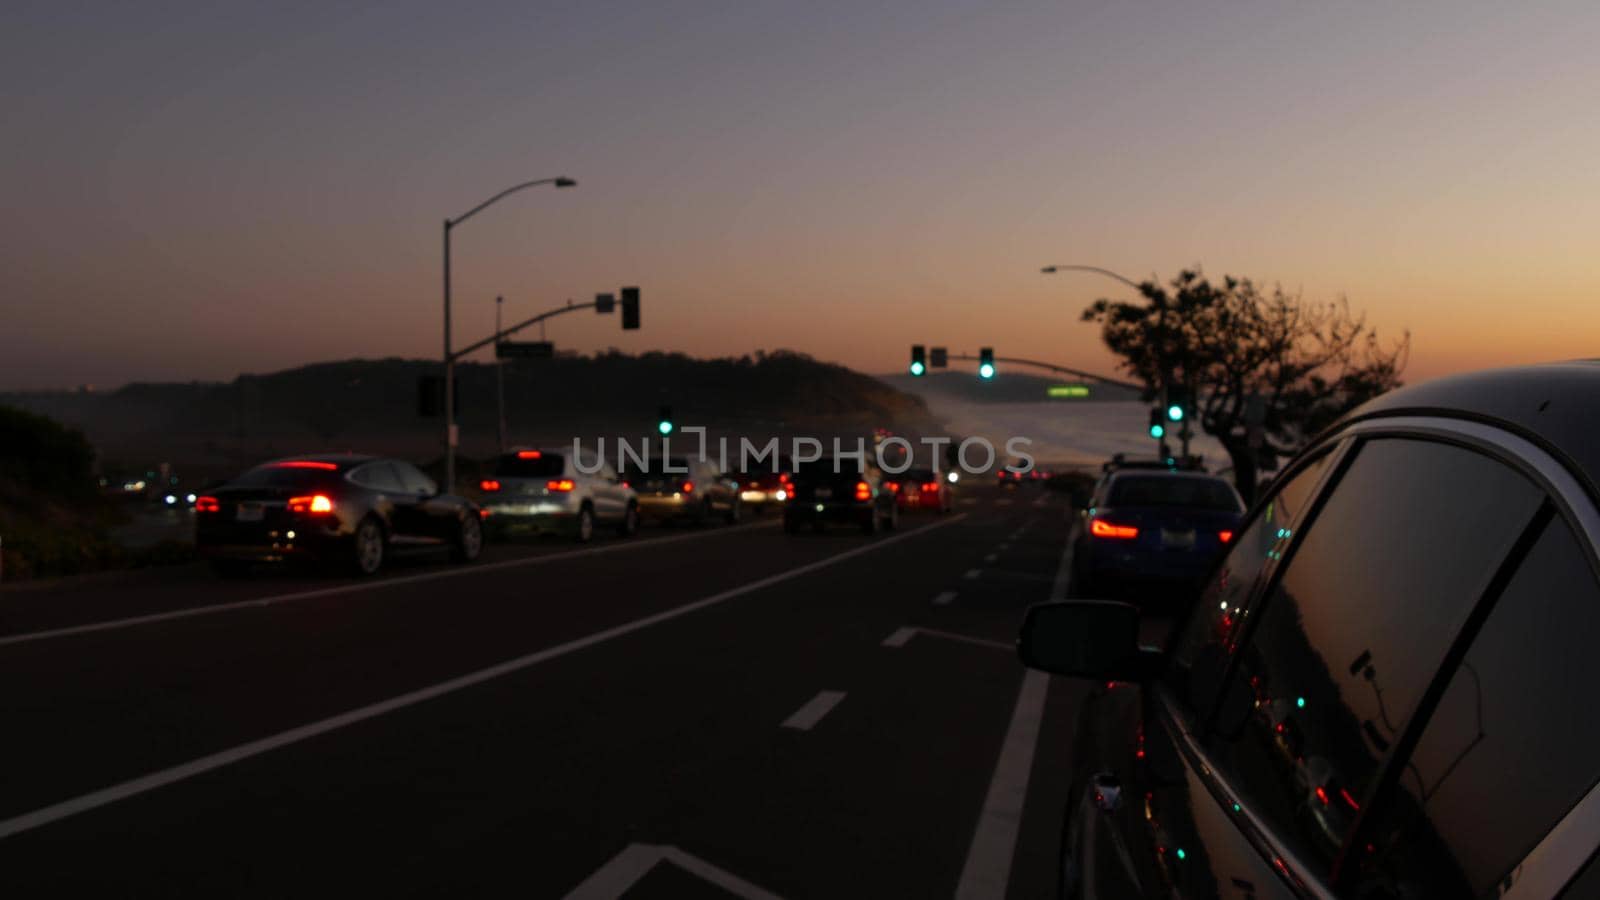 Traffic lights on pacific coast highway 1, Torrey Pines state beach, Del Mar, San Diego, California USA. Coastal road trip vacations. Roadtrip on freeway 101 along ocean. Cars in evening twilight dusk